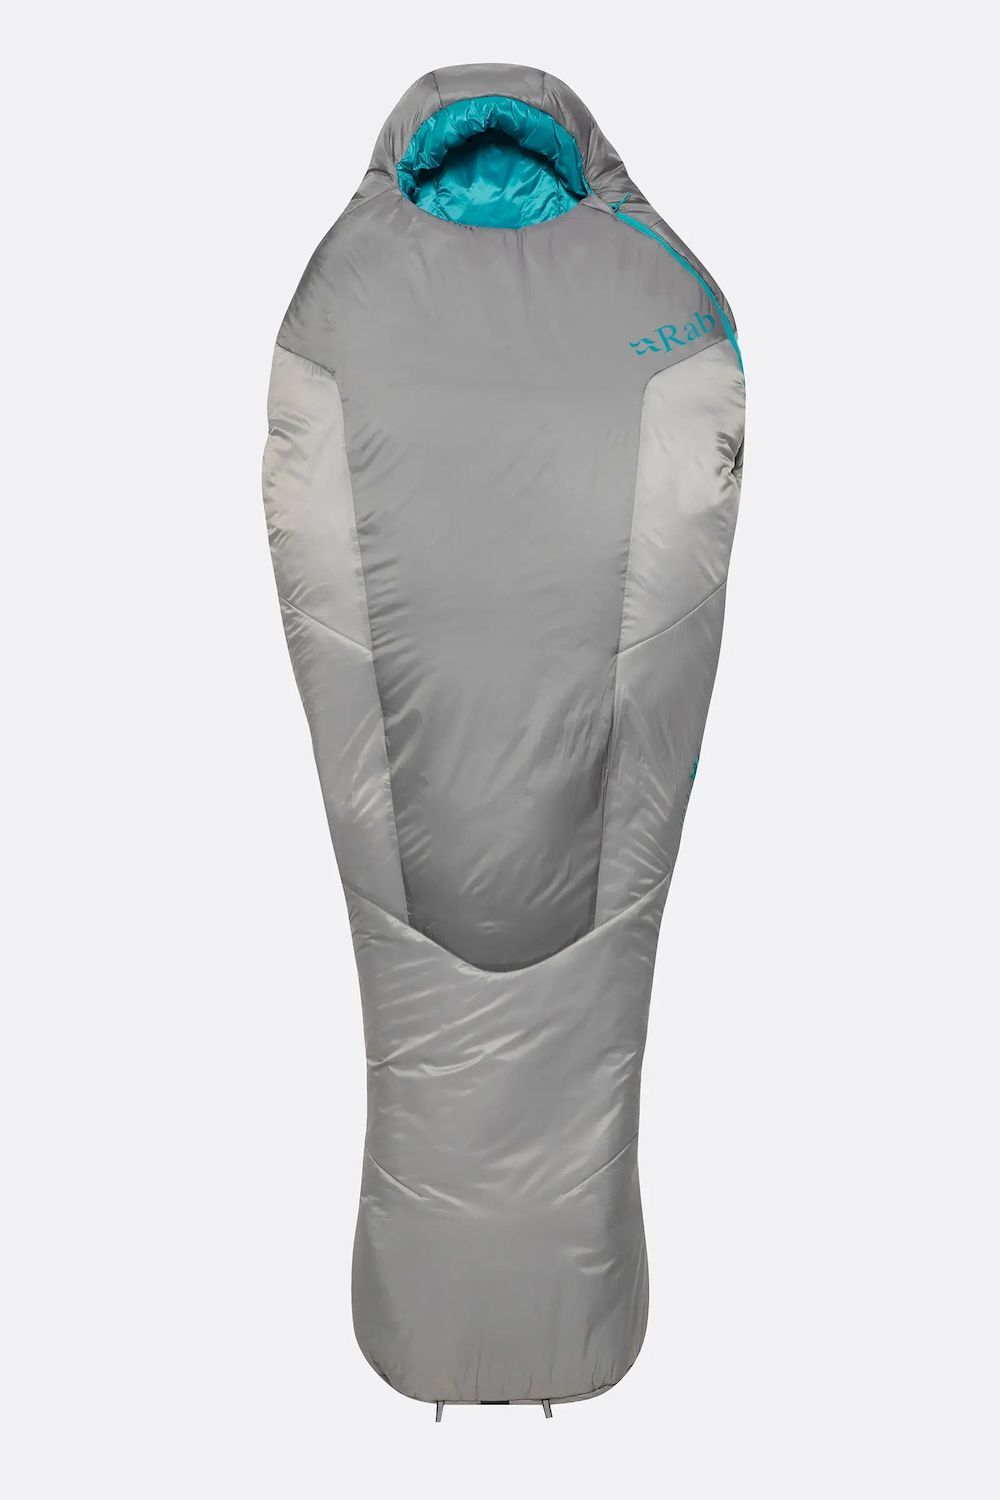 Rab Solar Ultra 2 Women's - Sleeping bag - Women's